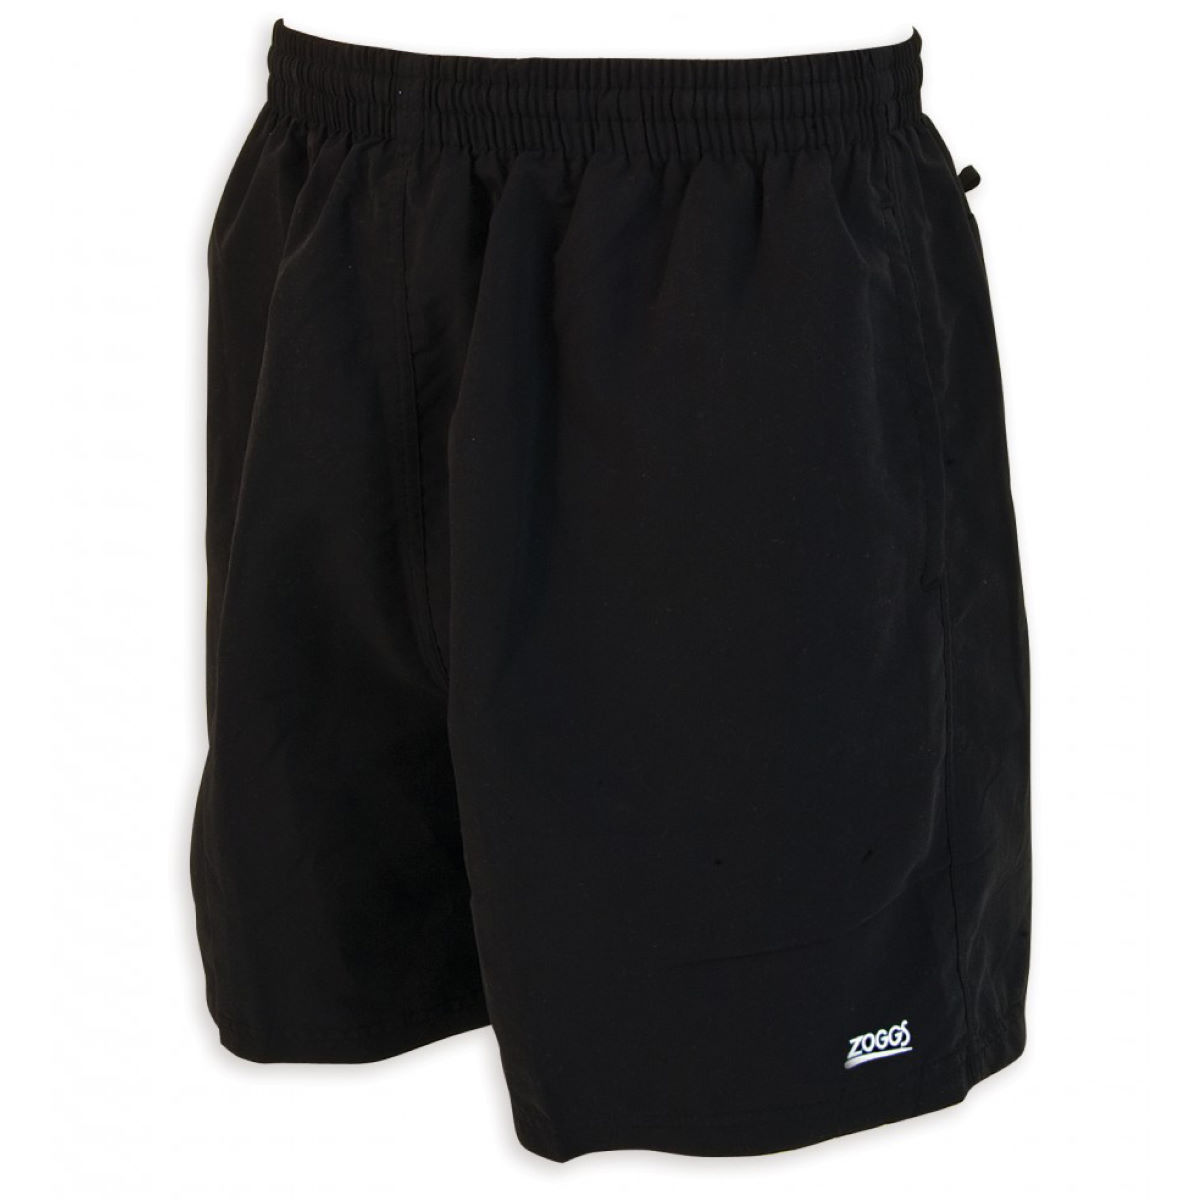 Pantalón corto Zoggs Penrith para niño (negro, 38 cm) - Bañadores cortos